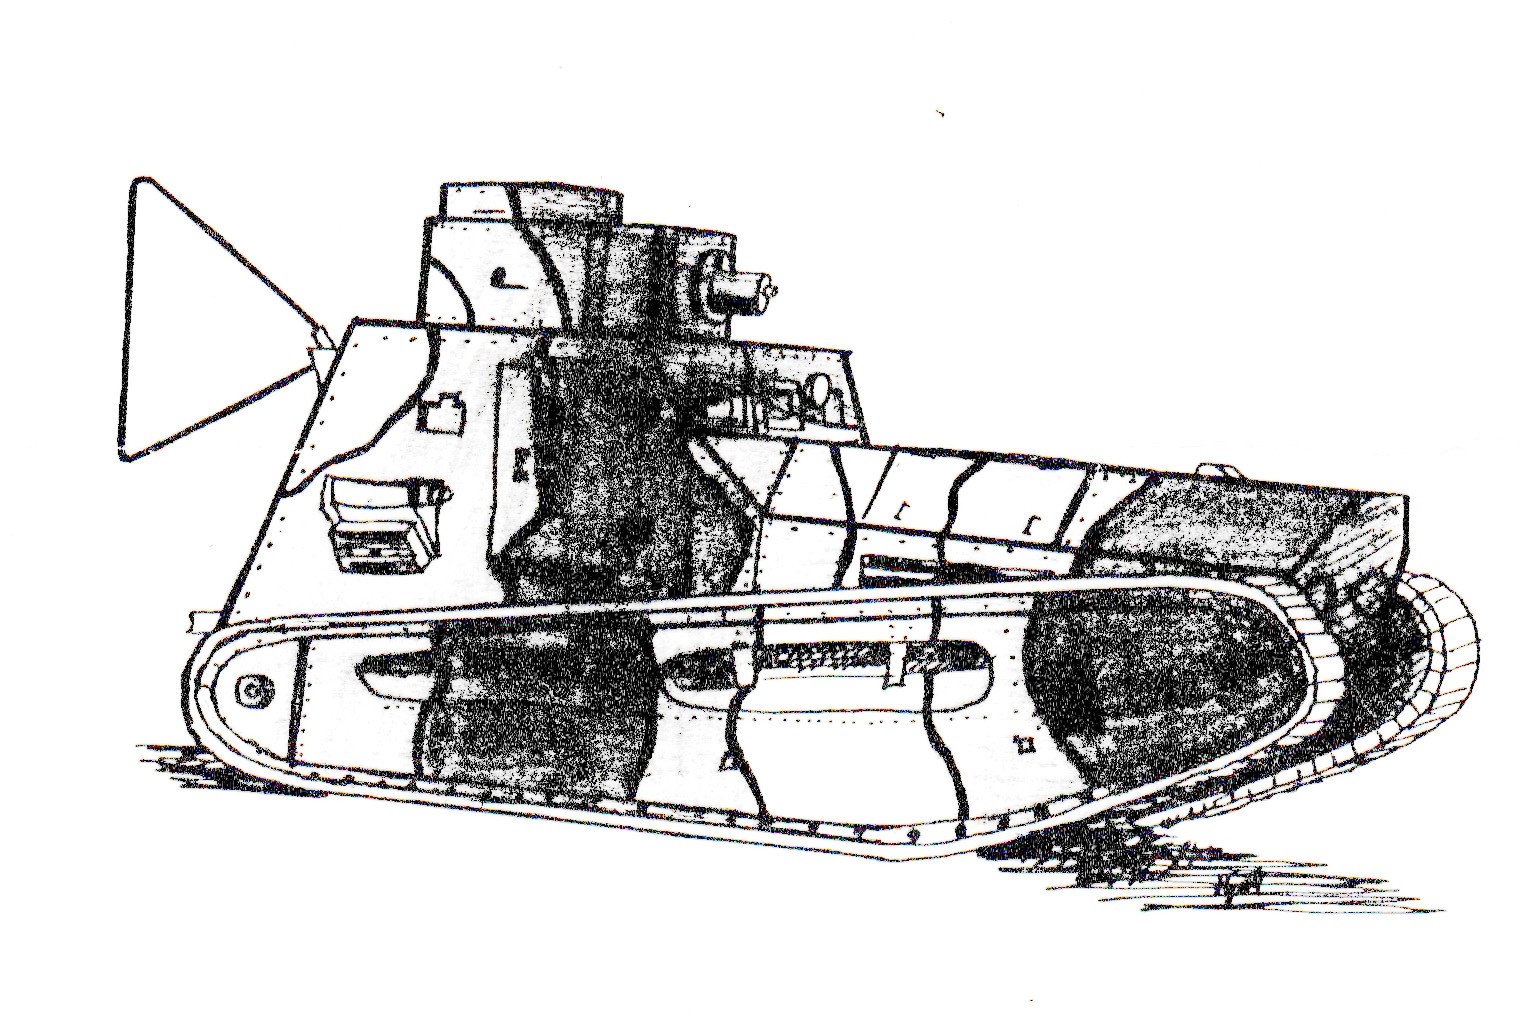 Stridsvagn m/21-29 (fm/22)